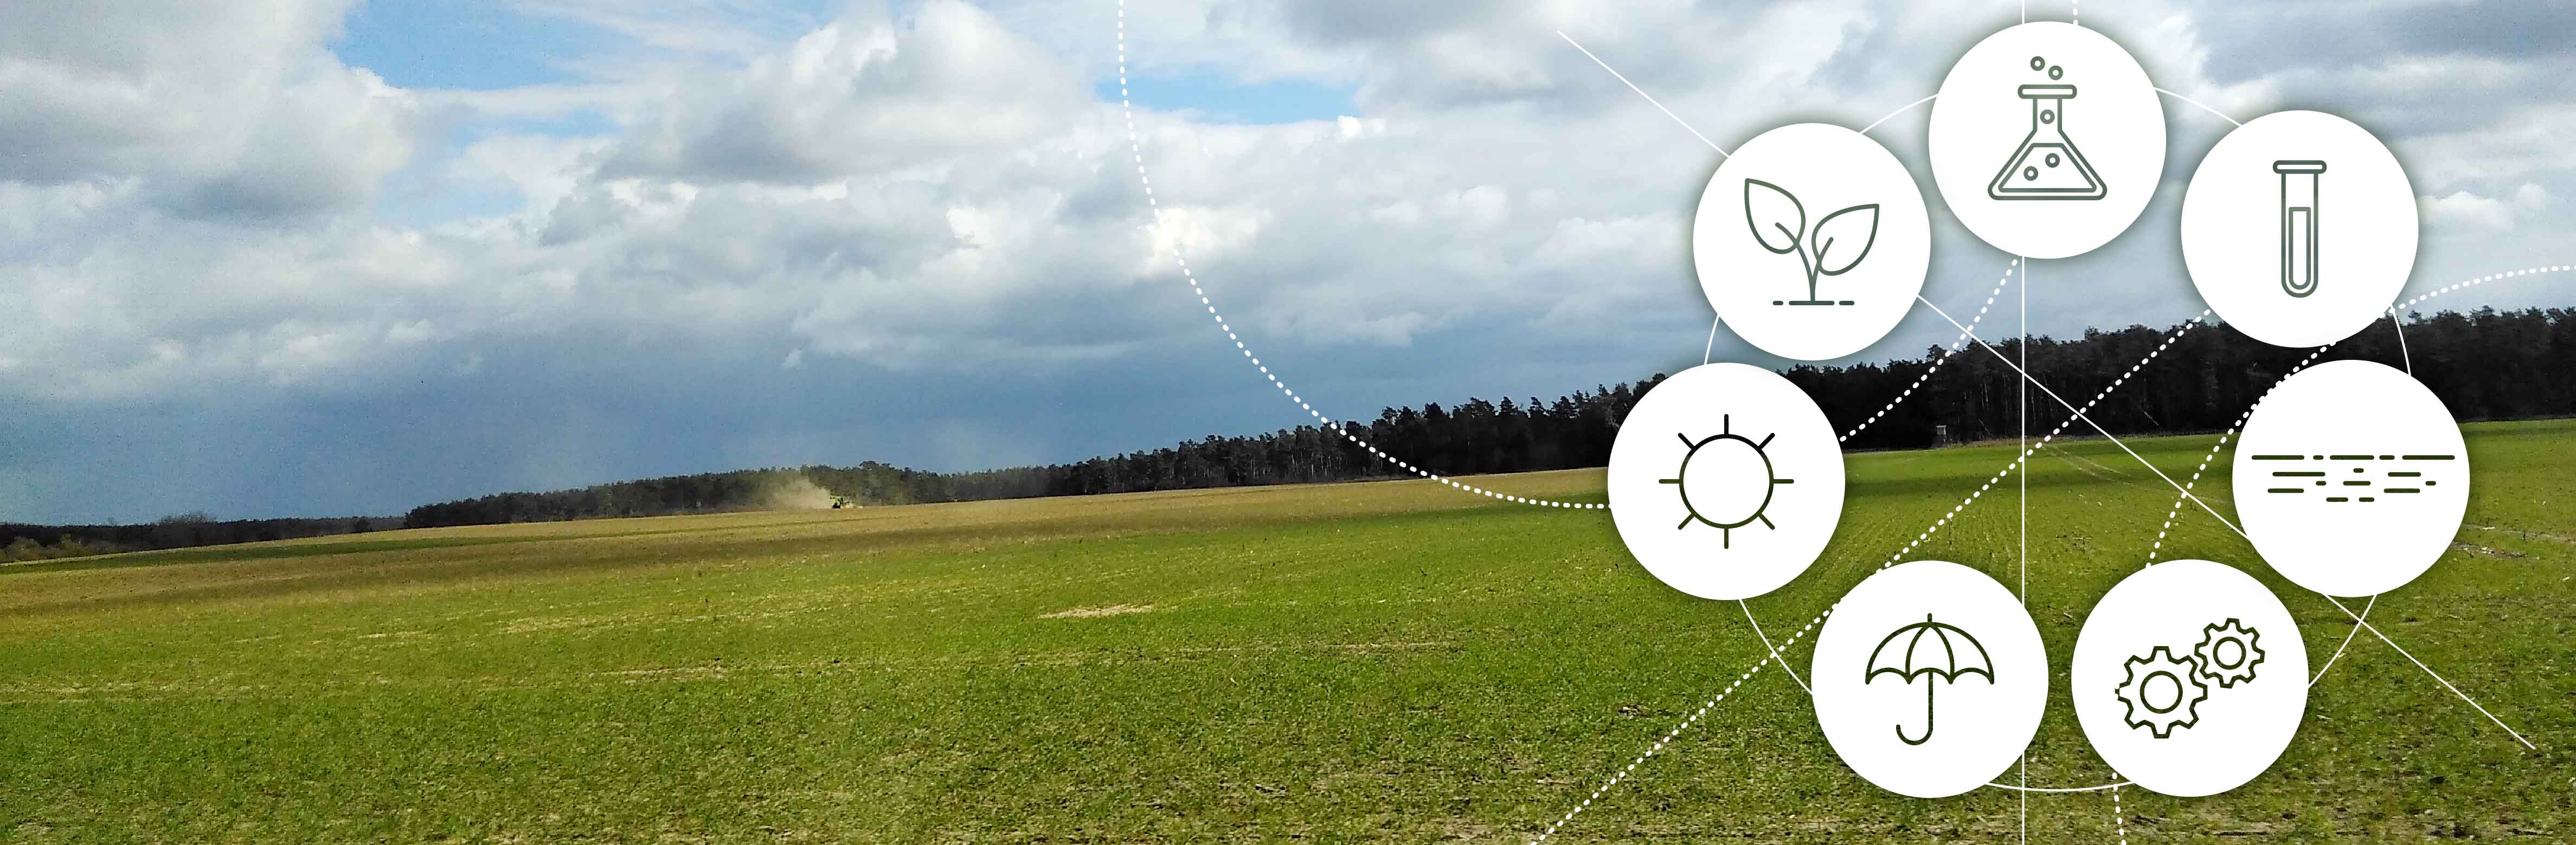 Grünes Feld mit Traktor vor bewölktem Himmel mit Grafik zu digitalen Daten